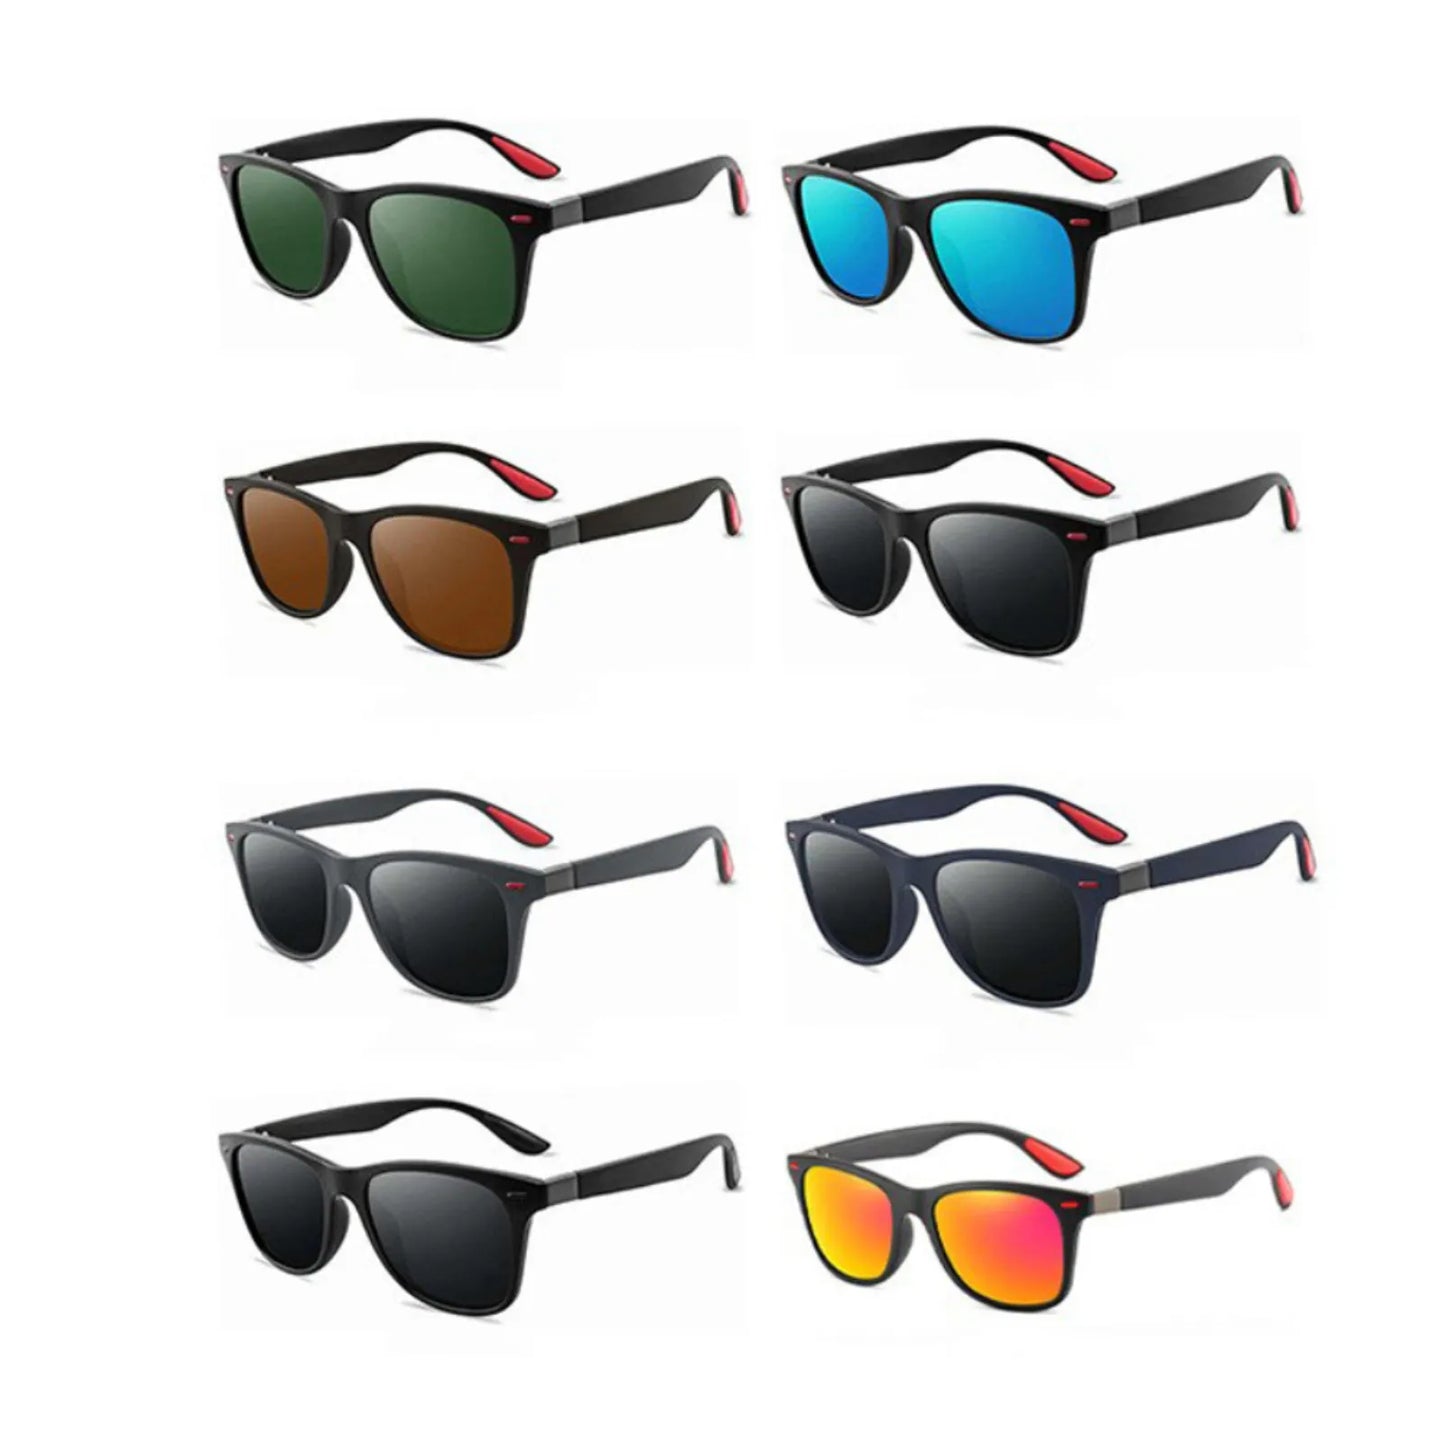 Eyliees Fashion Classic Polarized Sunglasses - Your Stylish Travel Companion